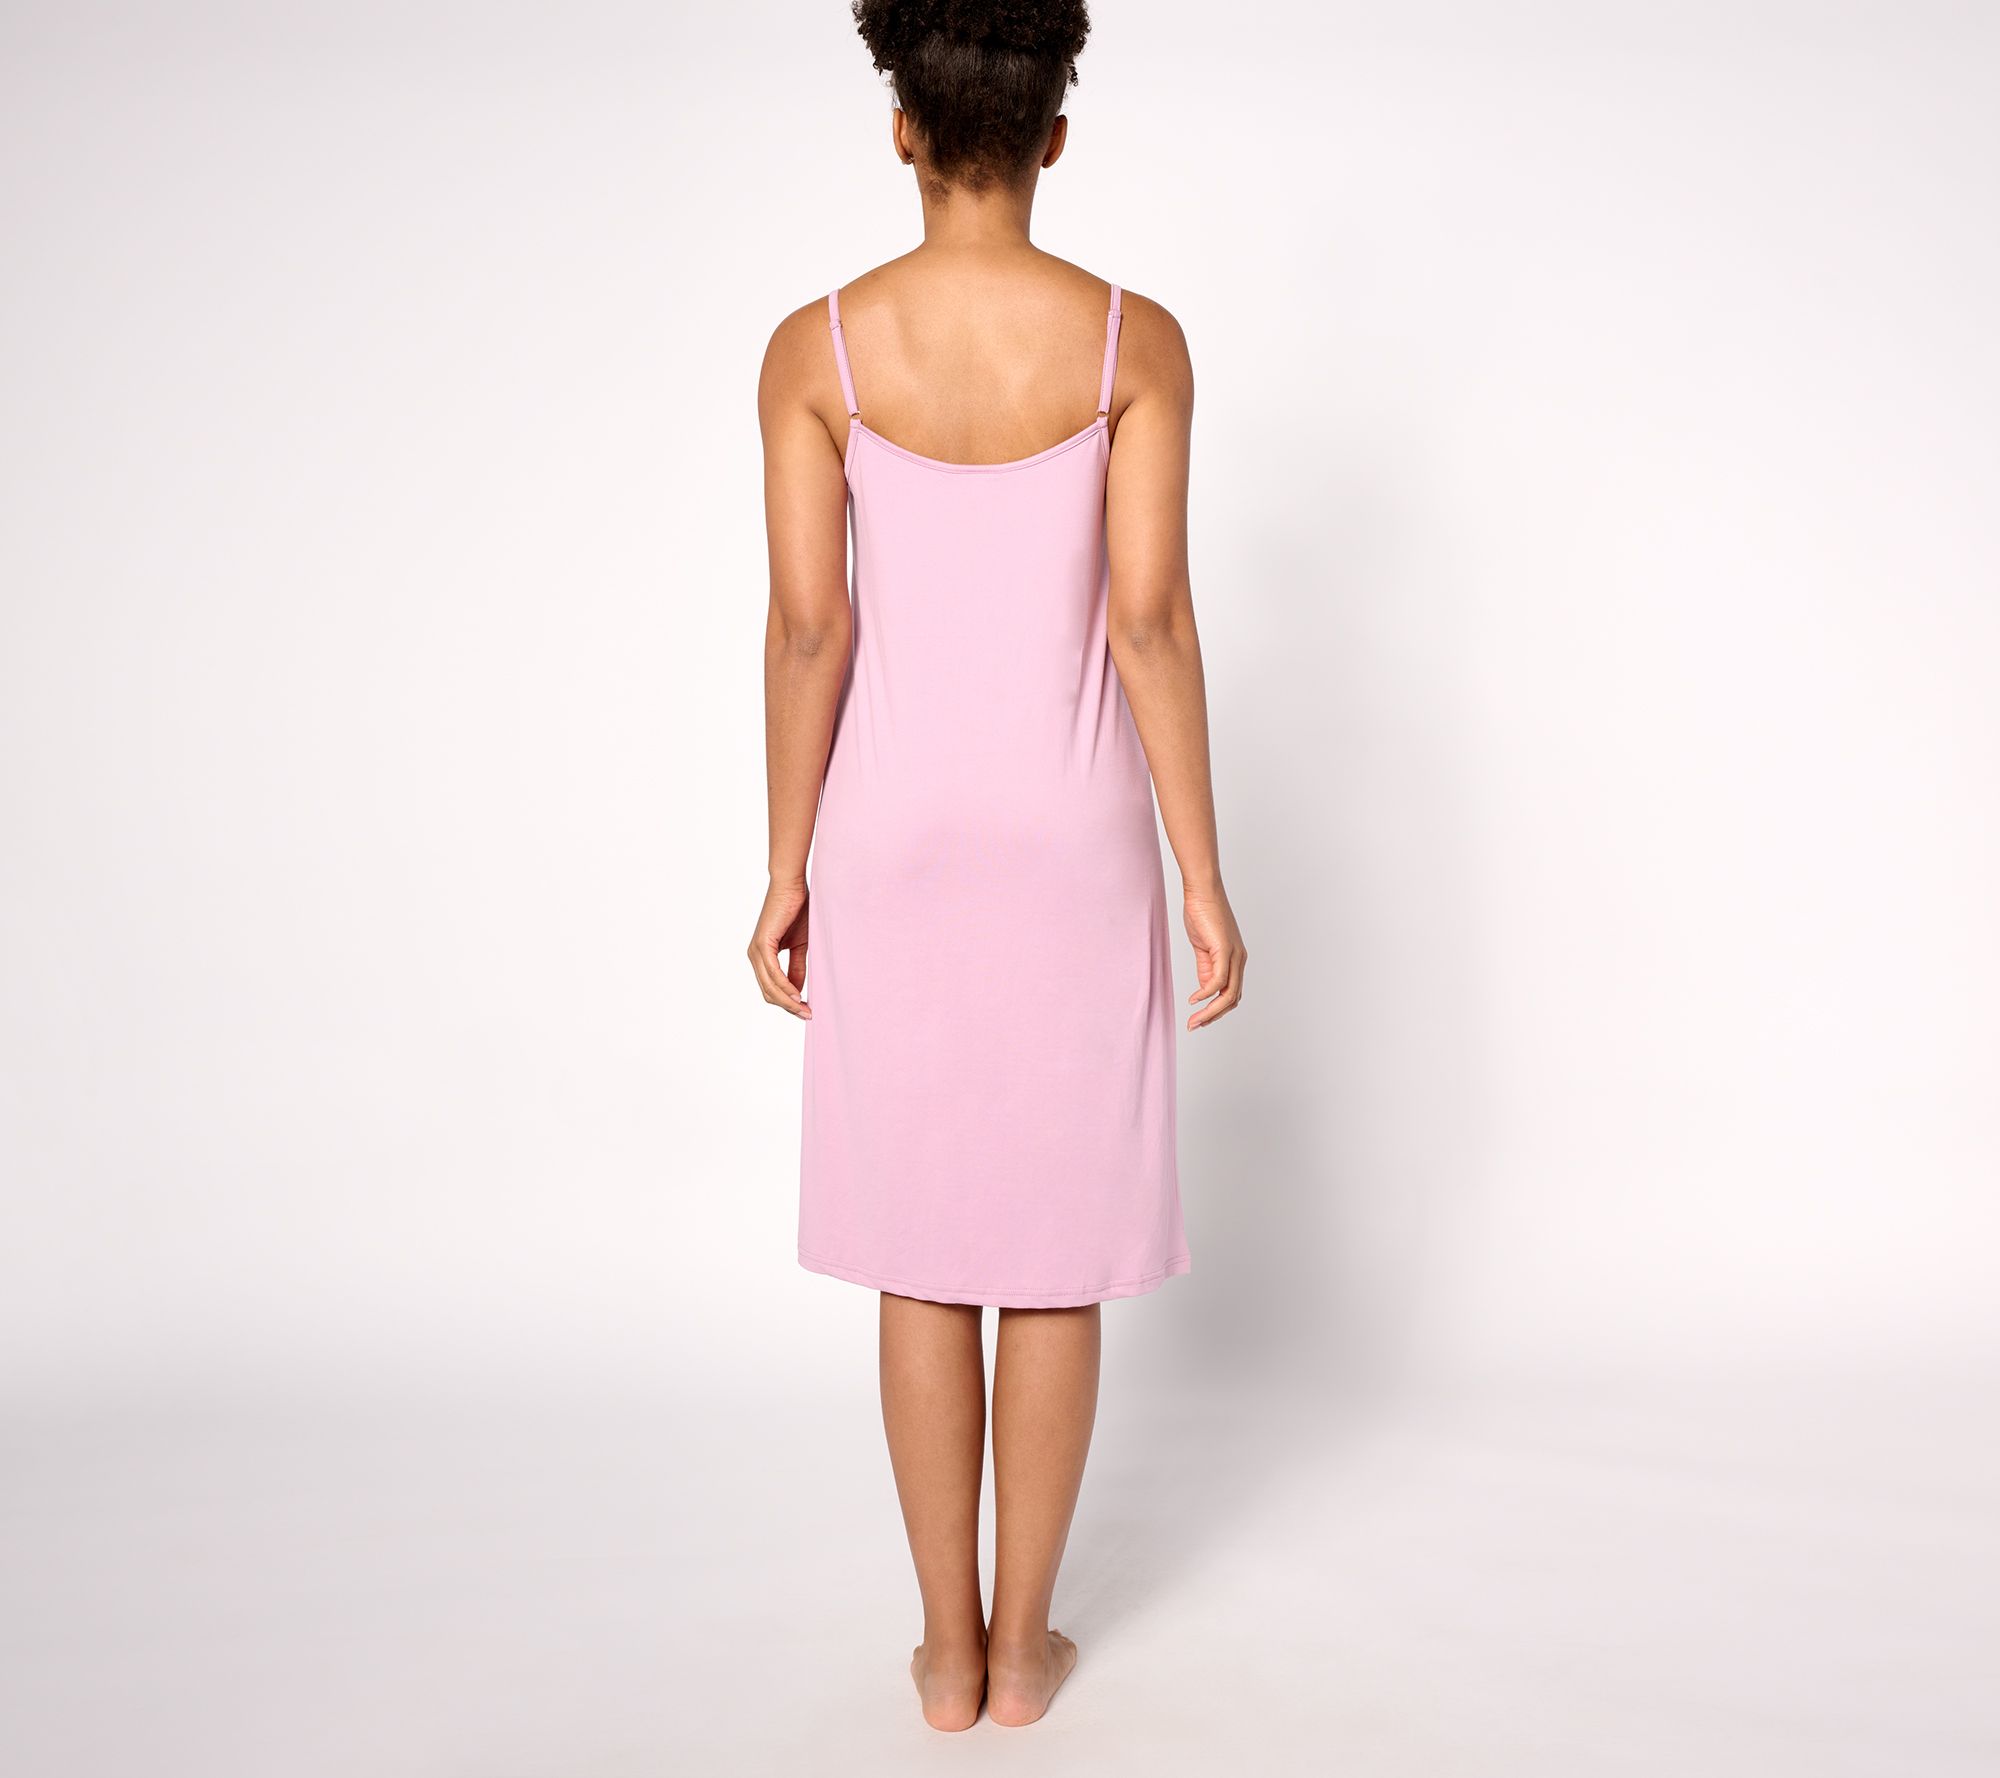 Track Soft Lounge Lace Slip Dress - Rose Print - 3X at Skims